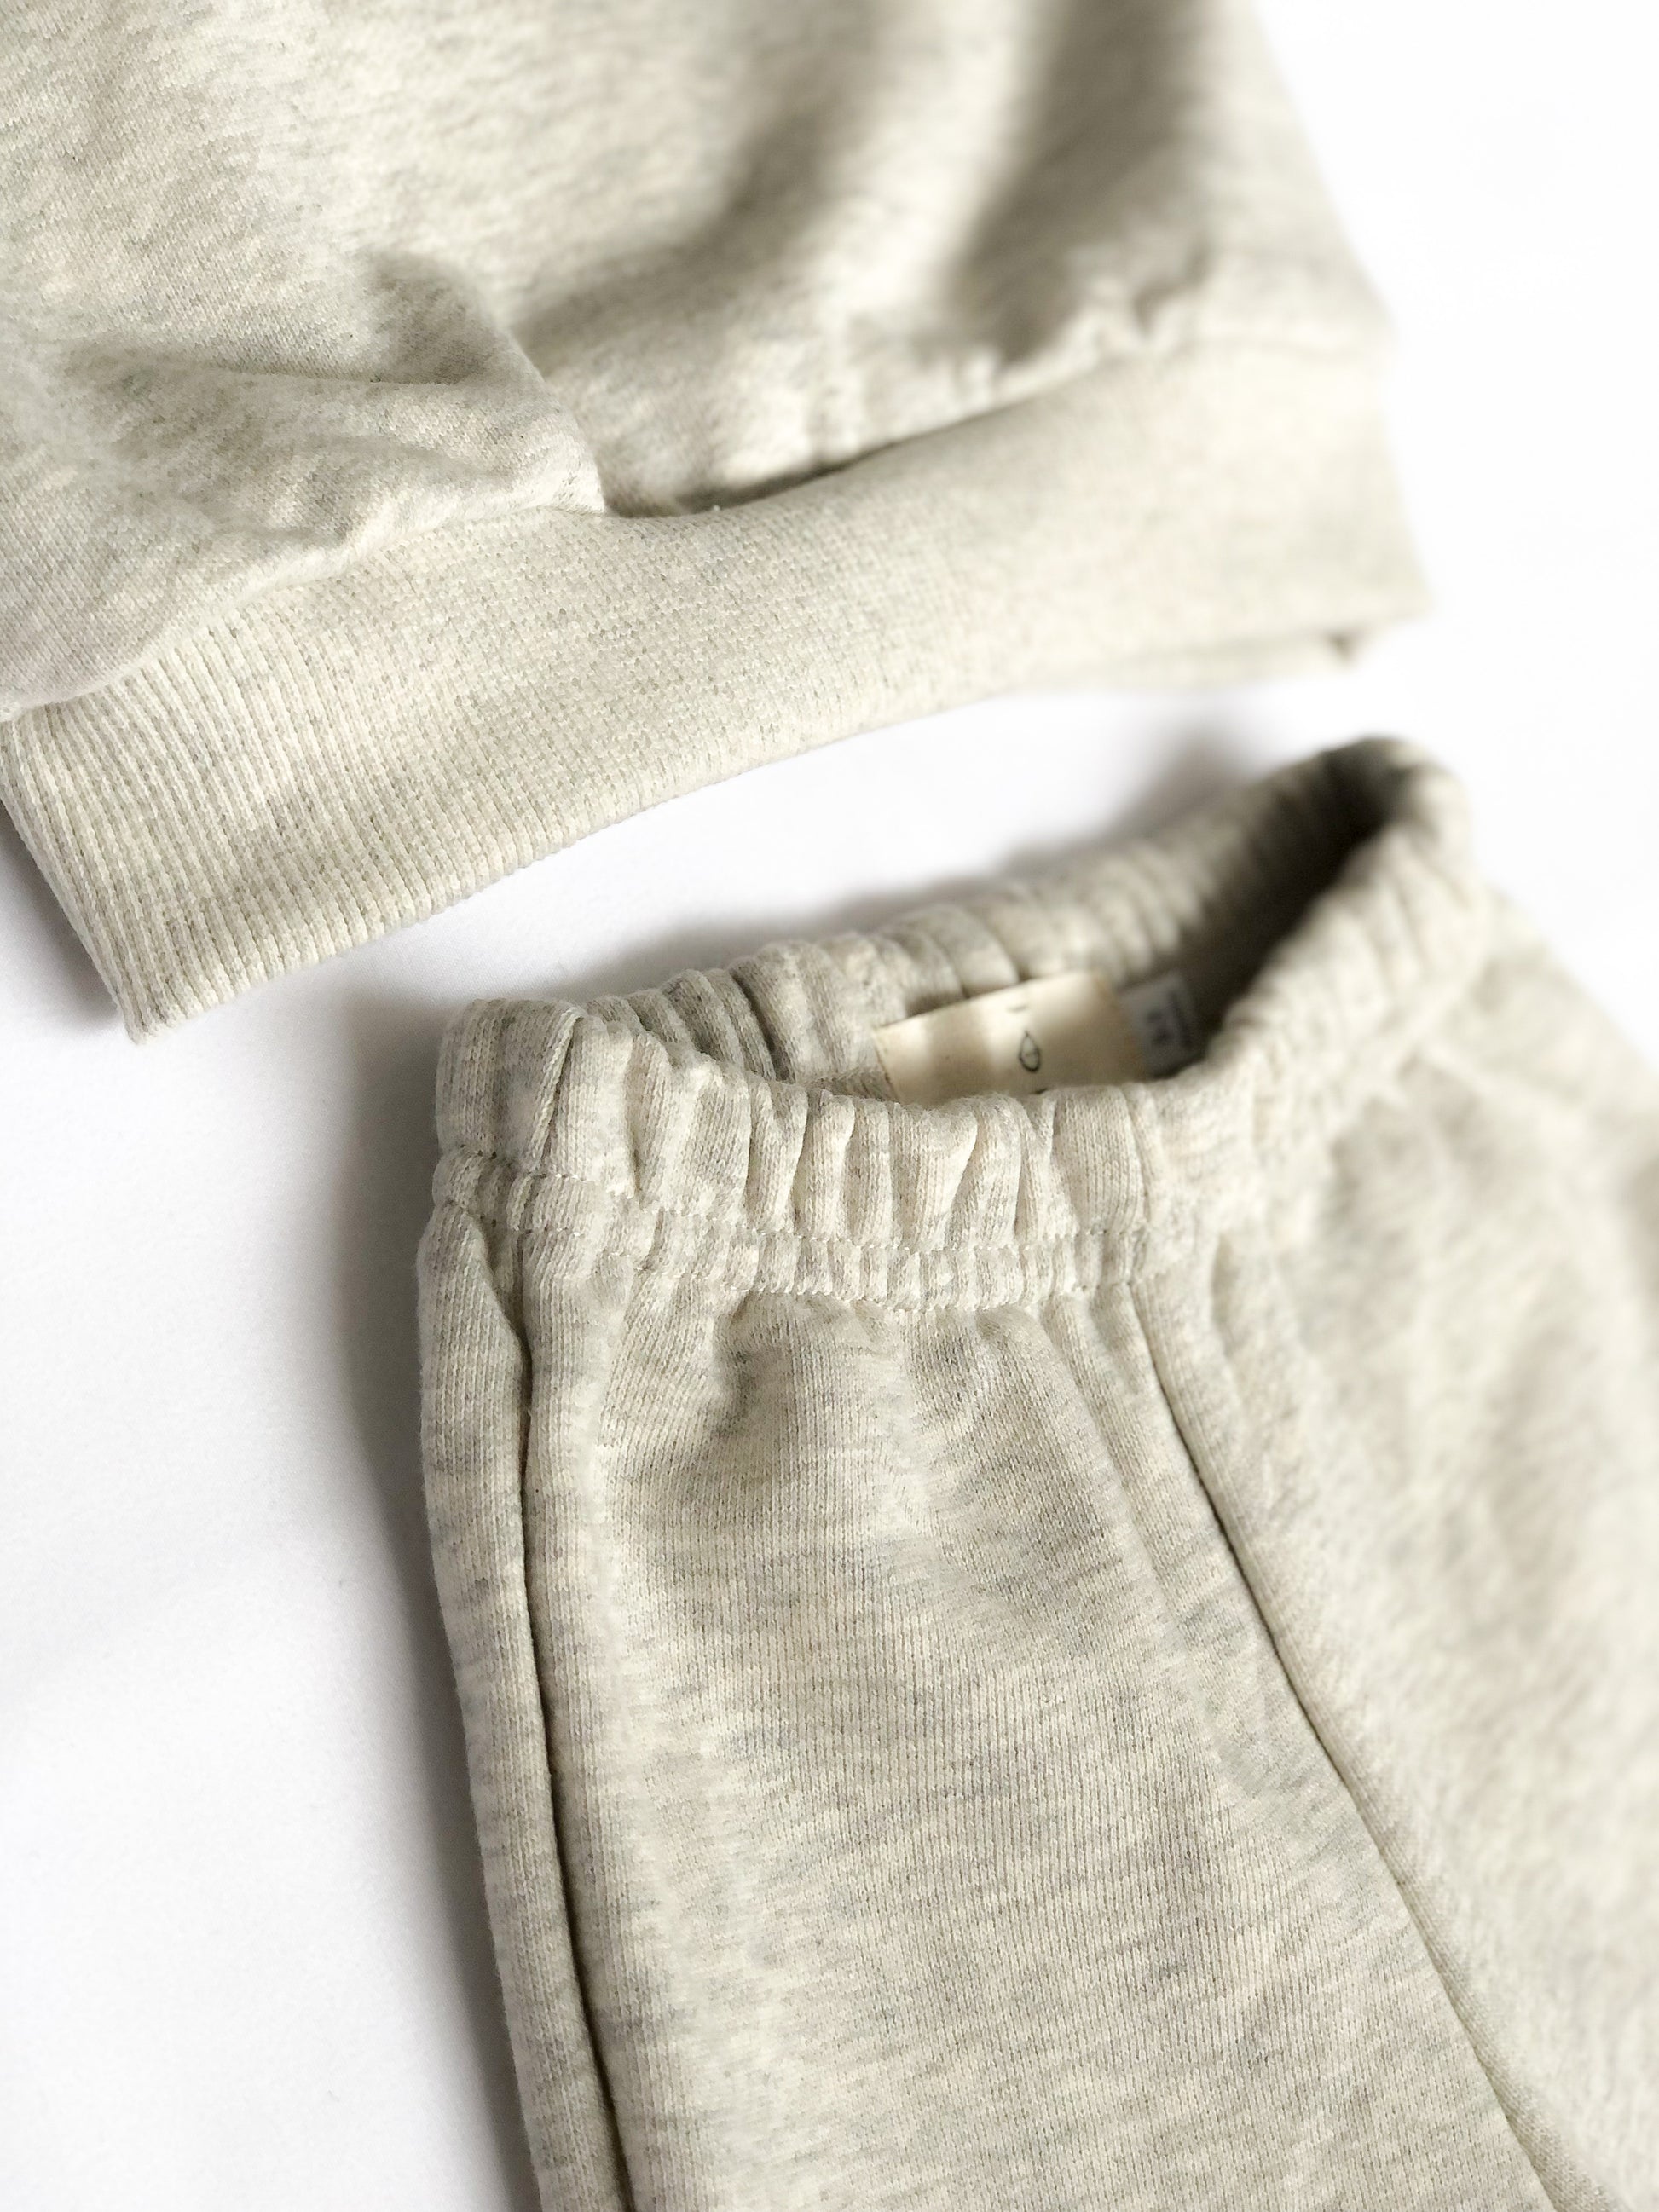 Organic Cotton Sweat suit Set - Beba Canada